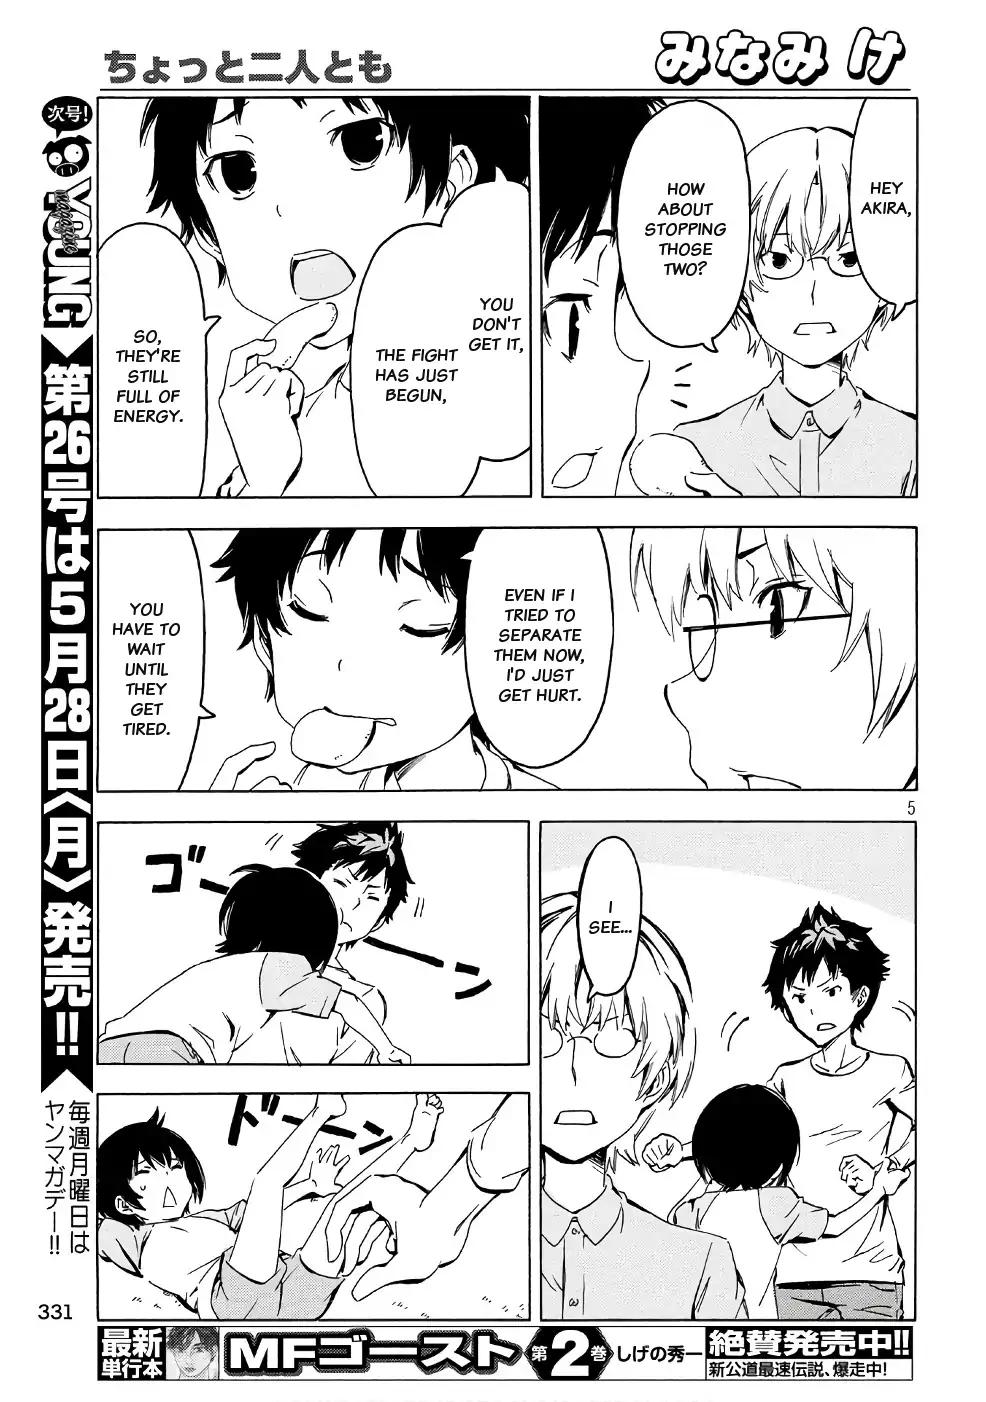 Minami-ke chapter 341 page 5